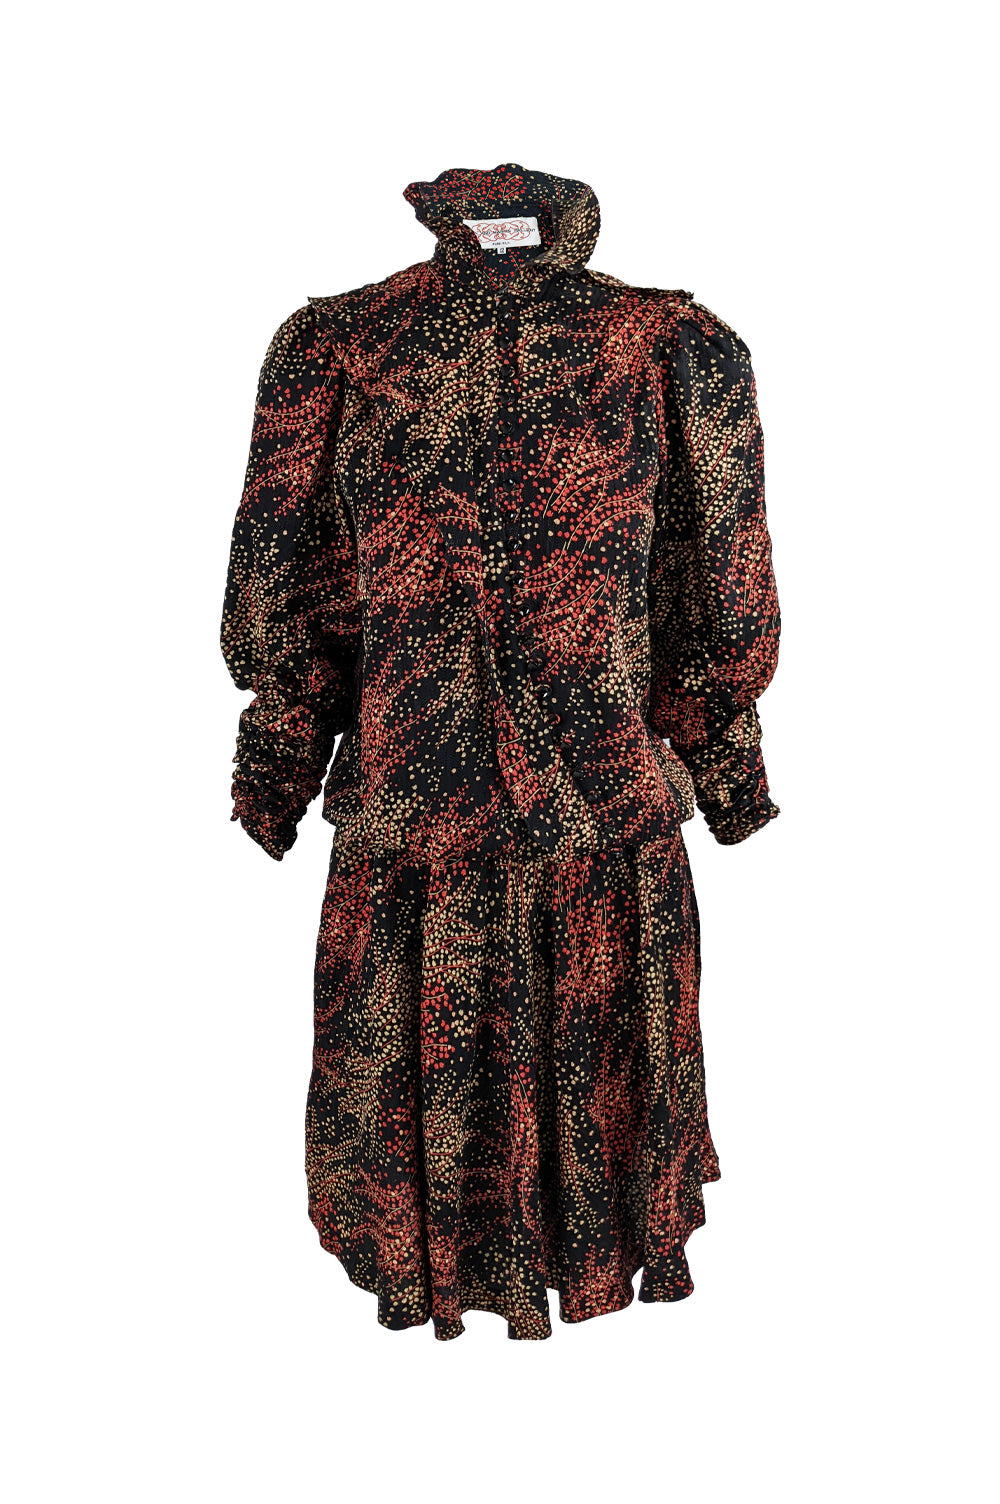 Jean & Martin Pallant Red & Black Silk Blouson Dress, 1980s